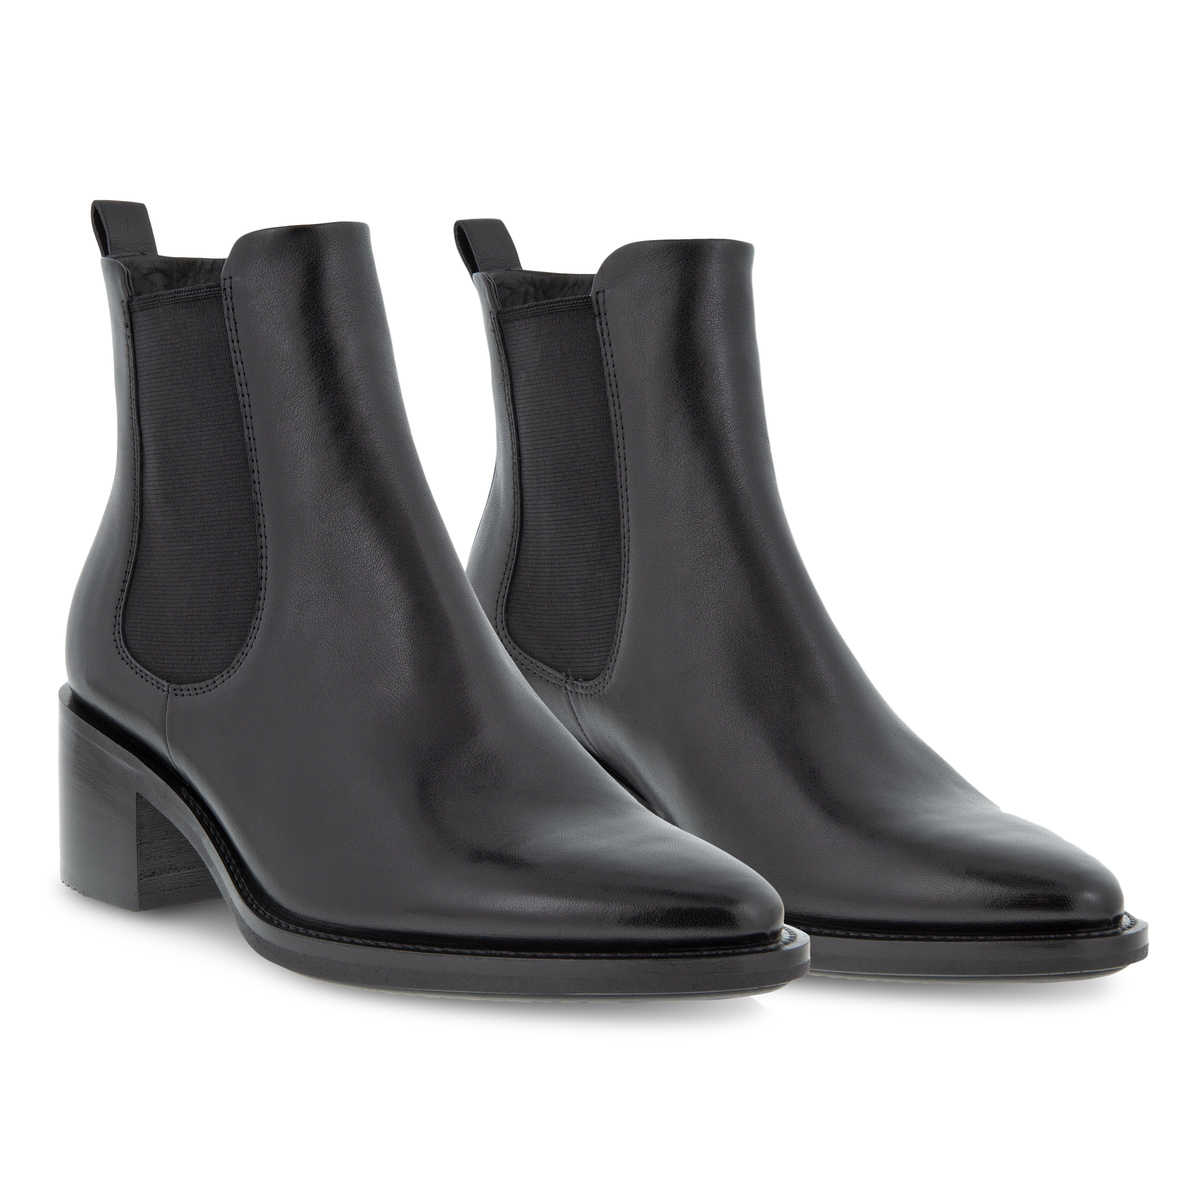 Heels - SHAPE 35 SARTORELLE - ECCO Shoes NZ